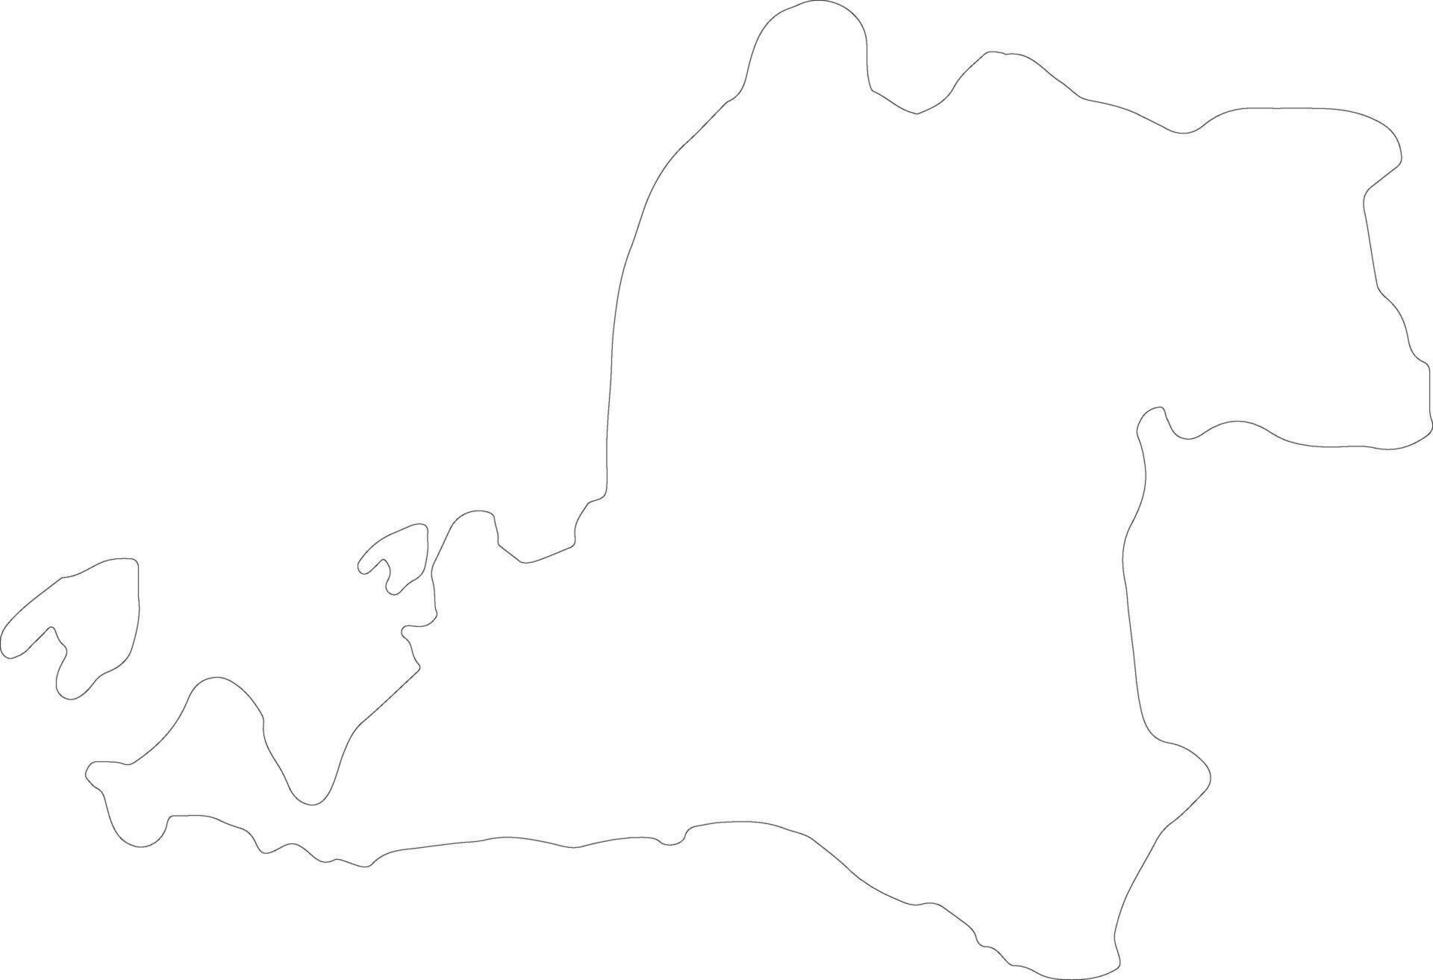 Banten Indonesia outline map vector